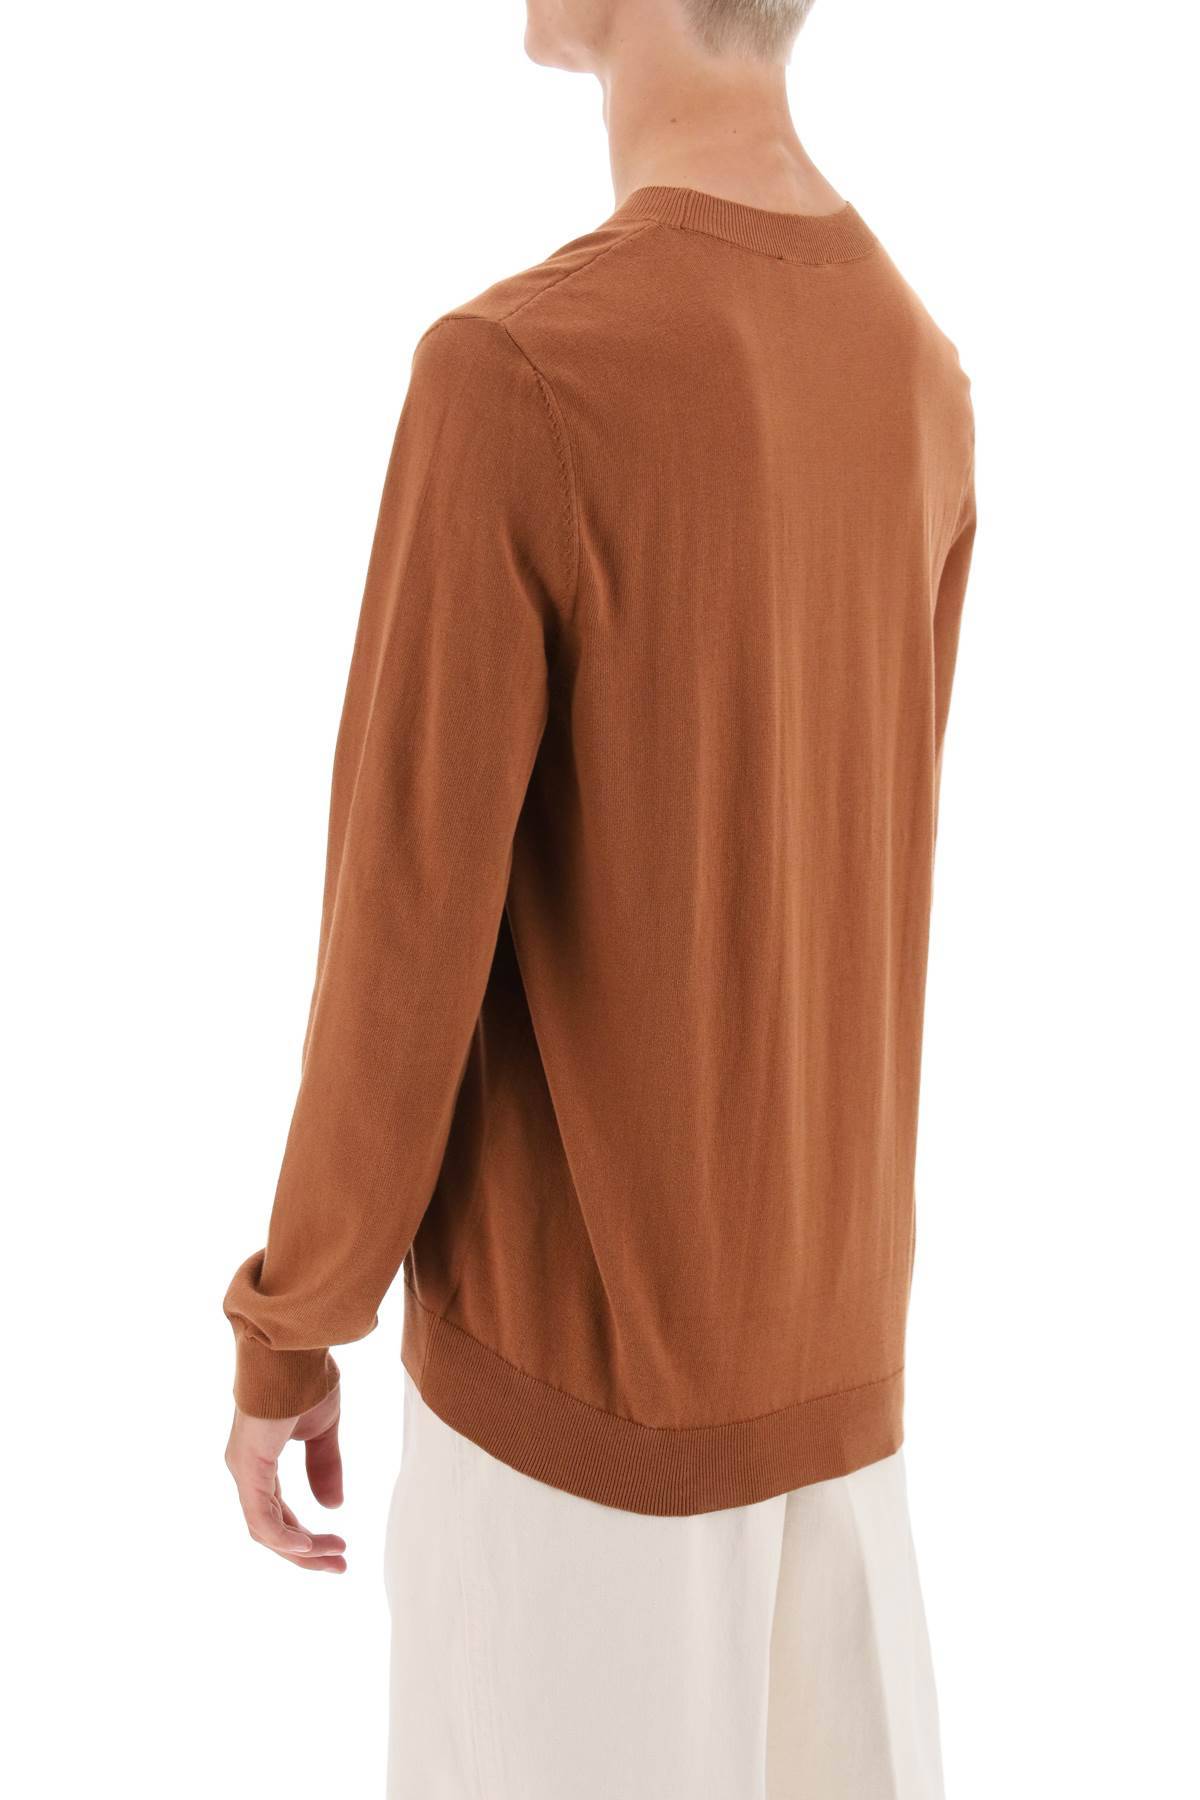 Shop Apc Crew-neck Cotton Sweater In Brown